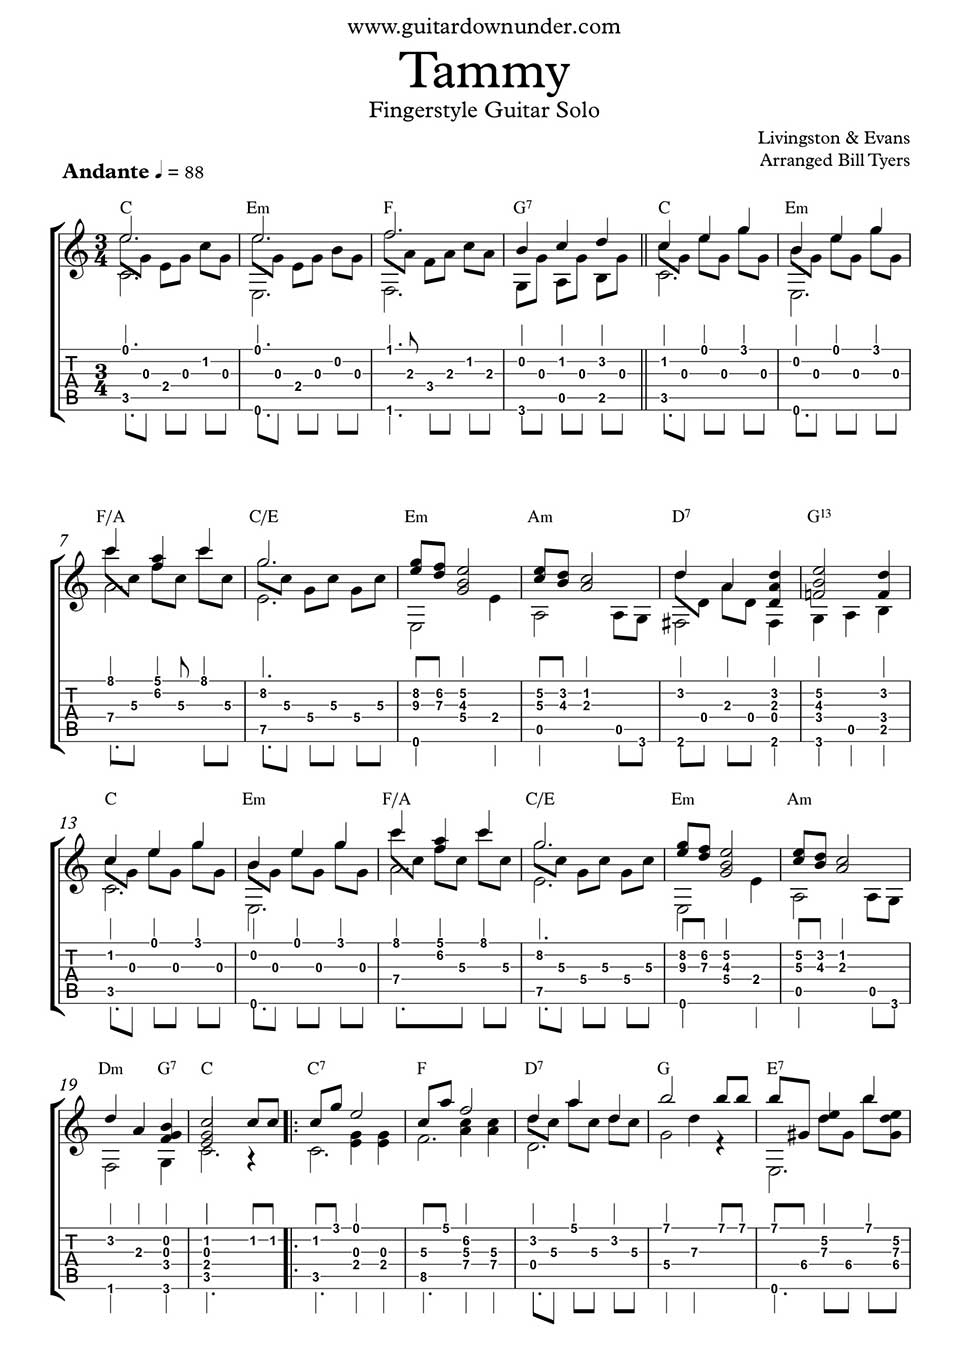 fingerstyle guitar tabs pdf free download